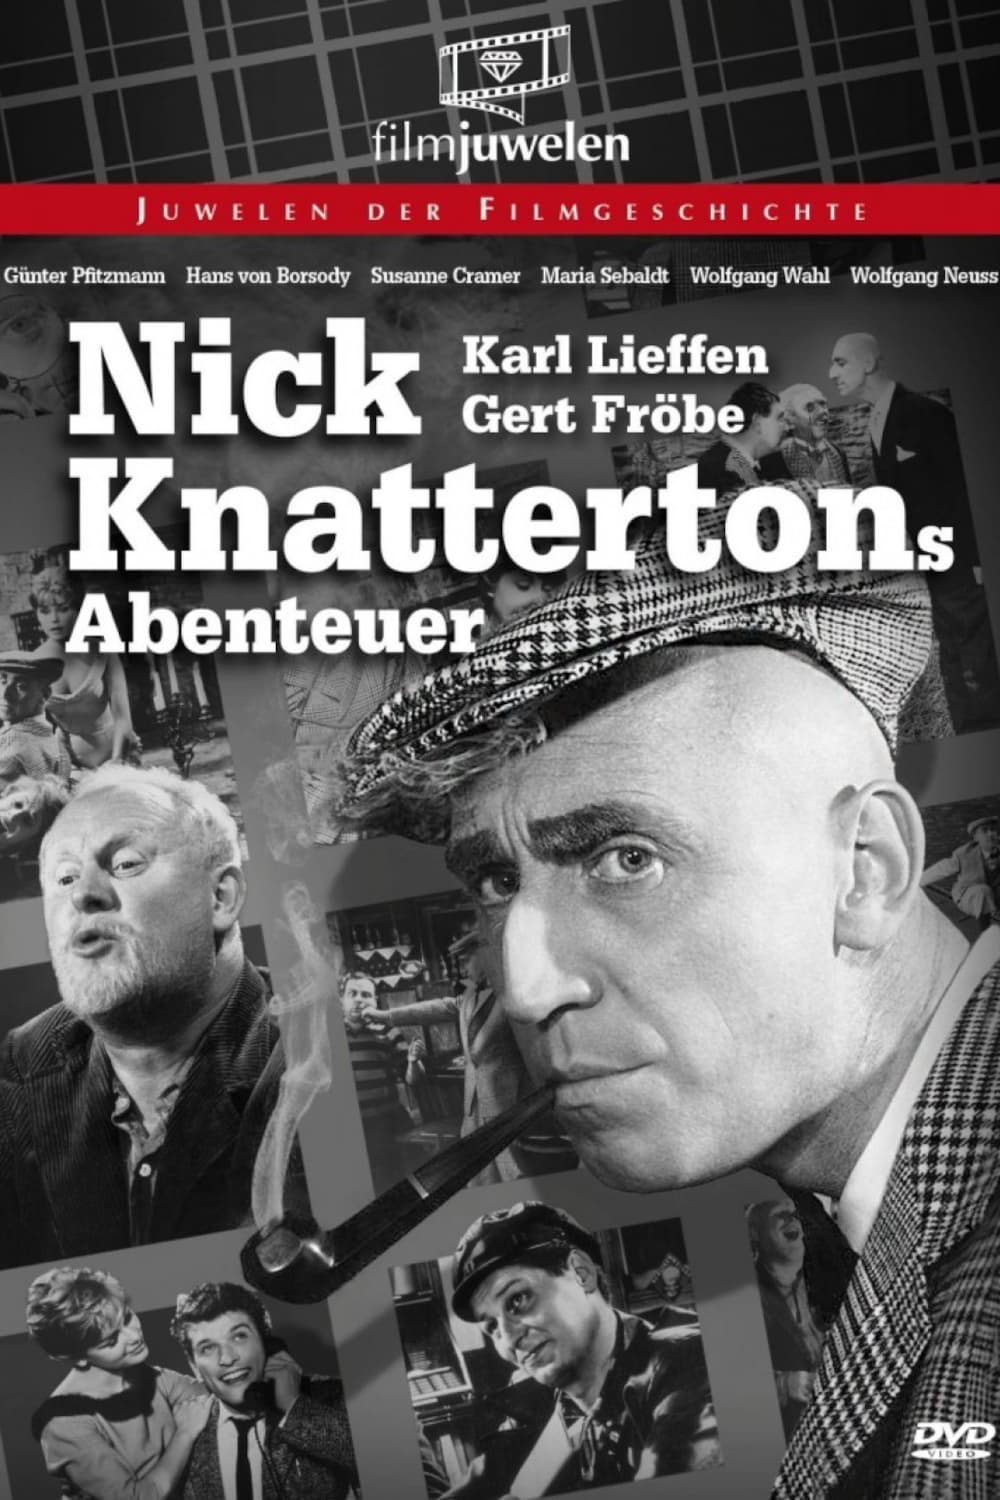 Nick Knattertons Abenteuer (1959)